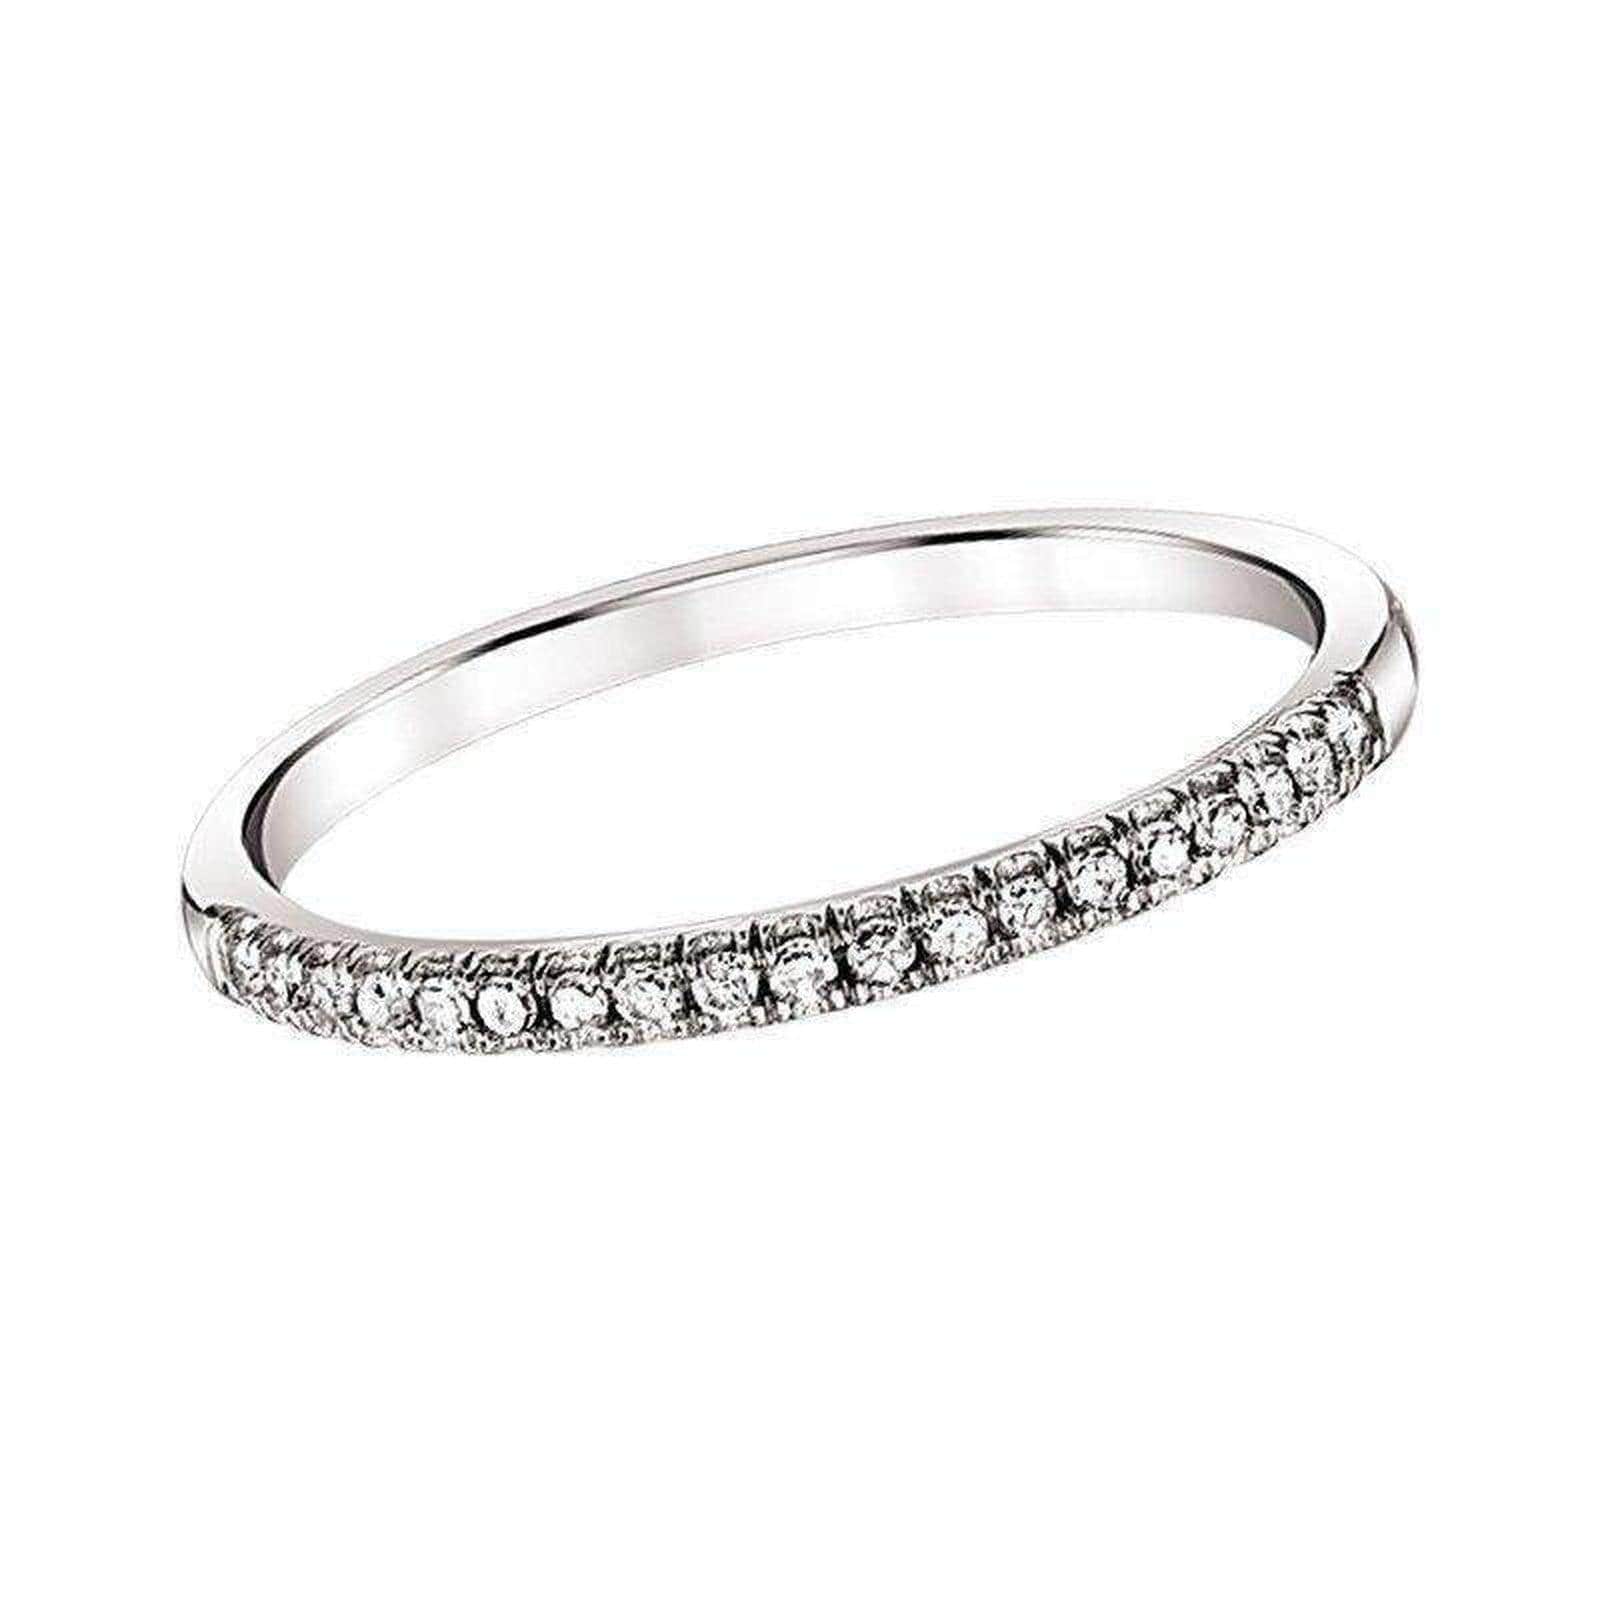 BW James Jewelers diamond wedding bands White Gold Diamond Wedding Band 1/10ctw